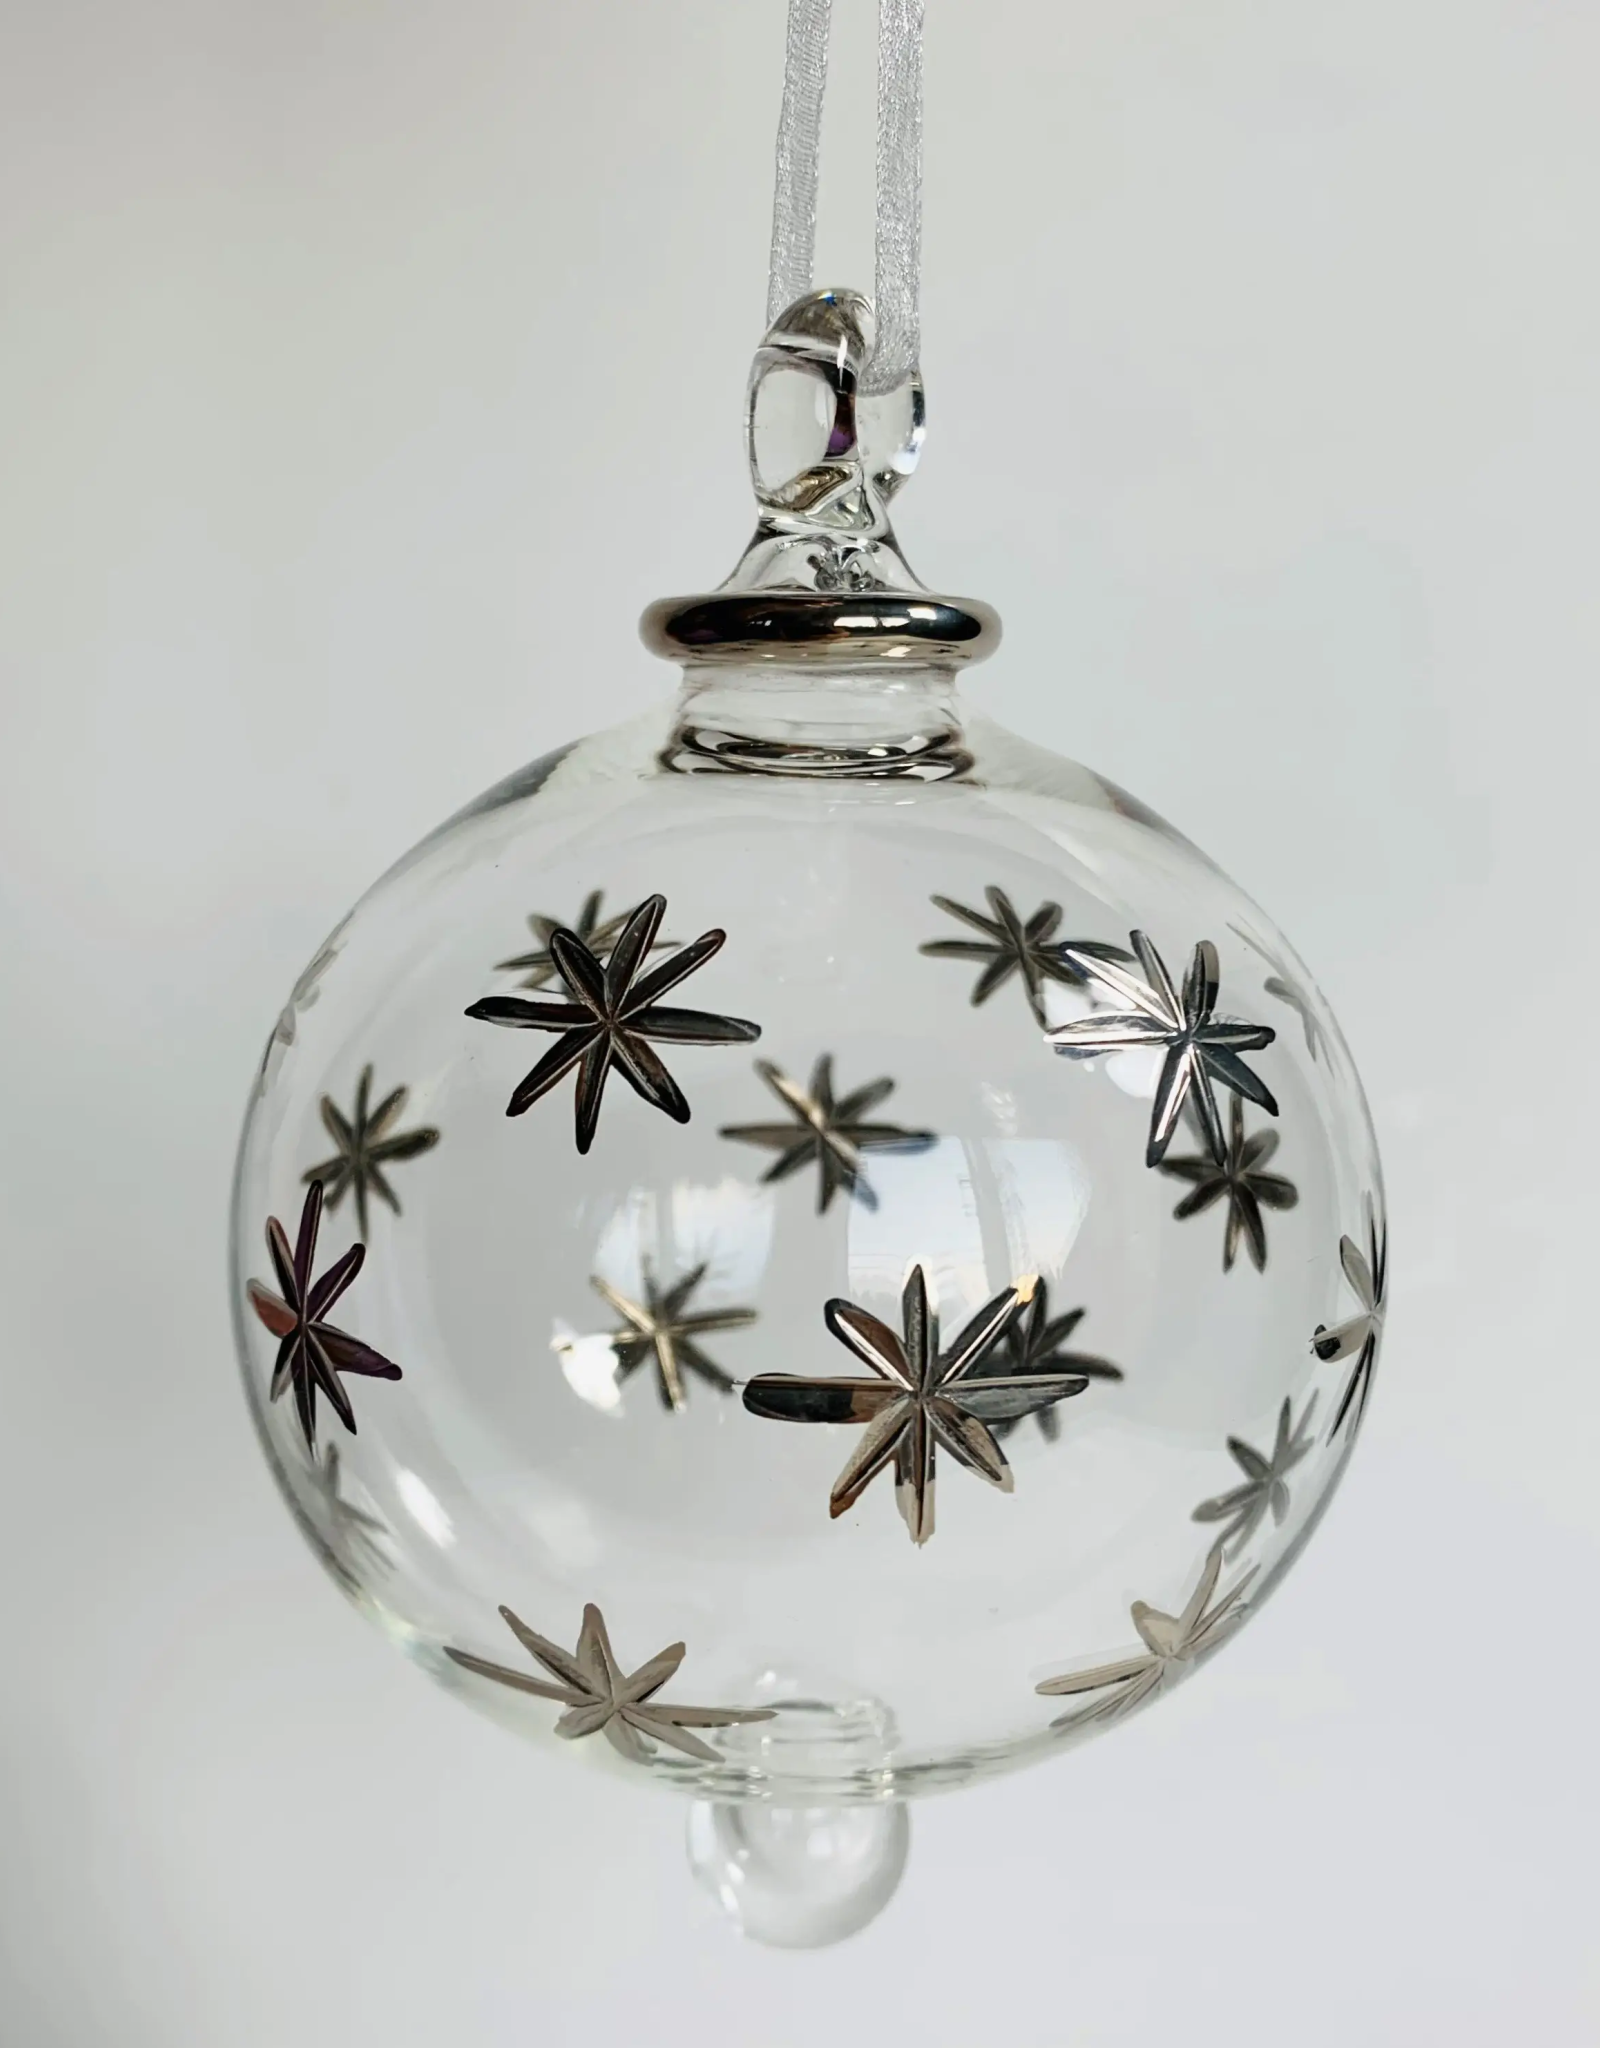 Dandarah Blown Glass Ornament - Silver Stars